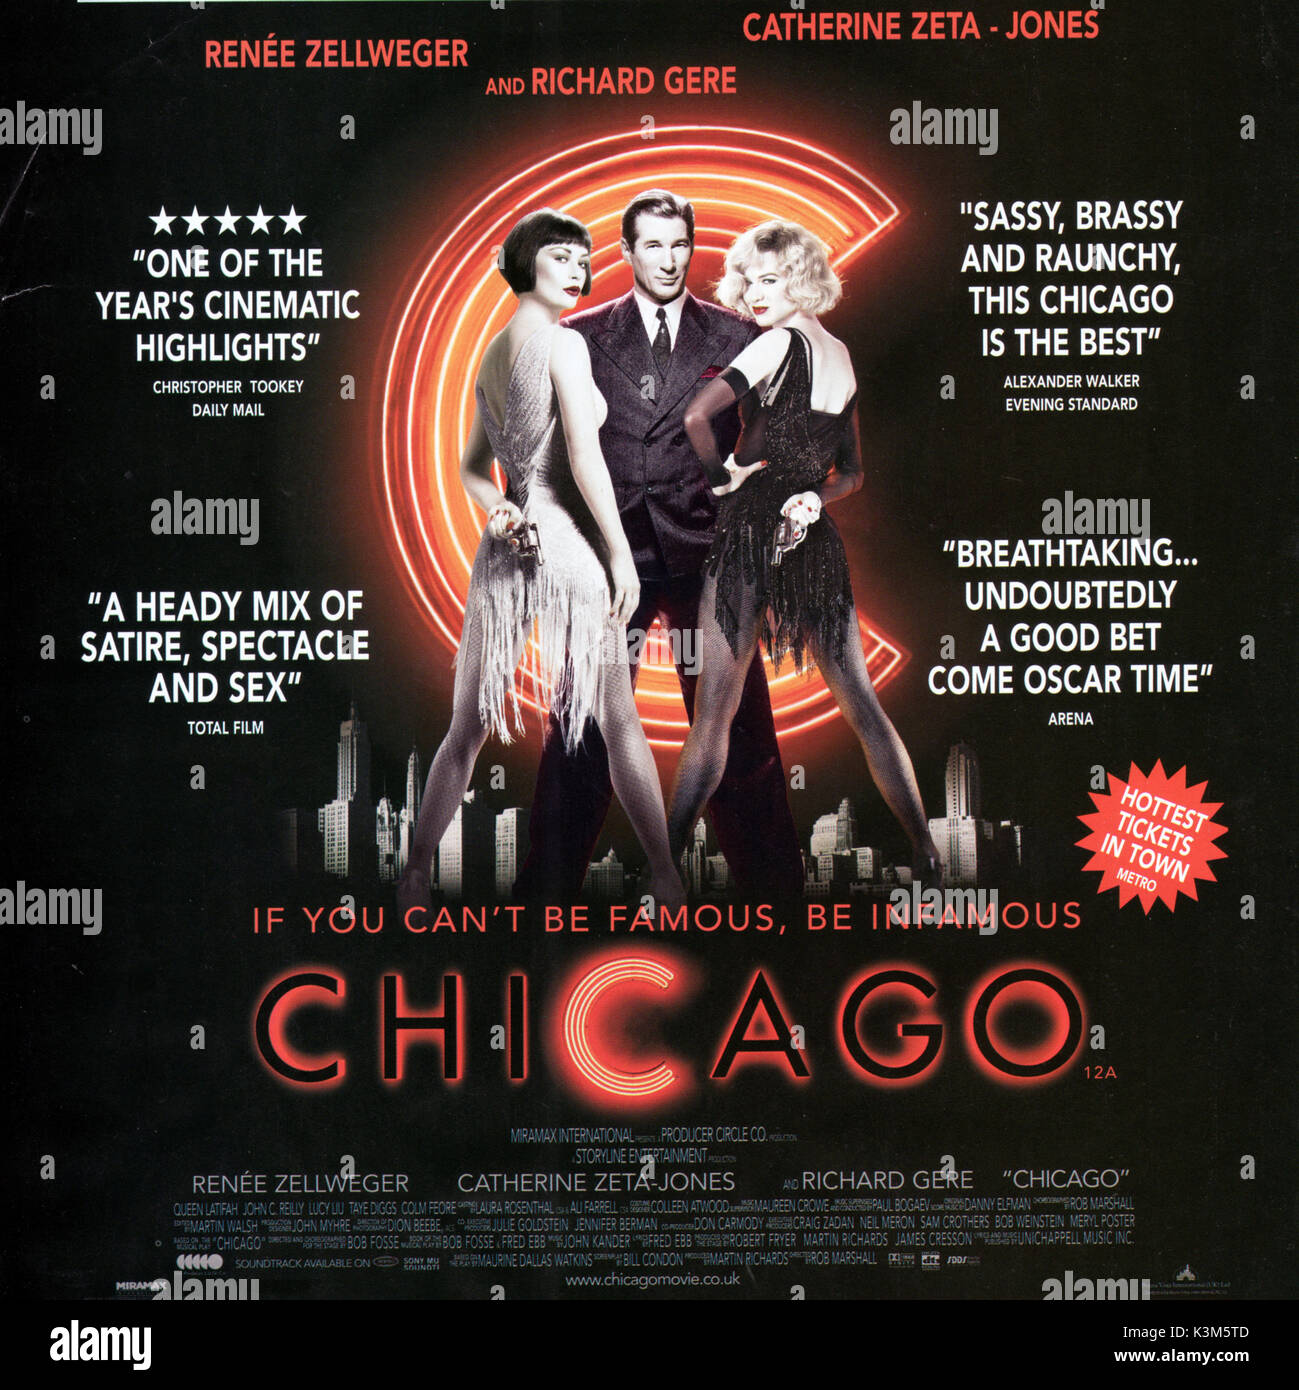 Home USA NEW A Chicago Movie POSTER 11 x 17 Catherine Zeta-Jones ...